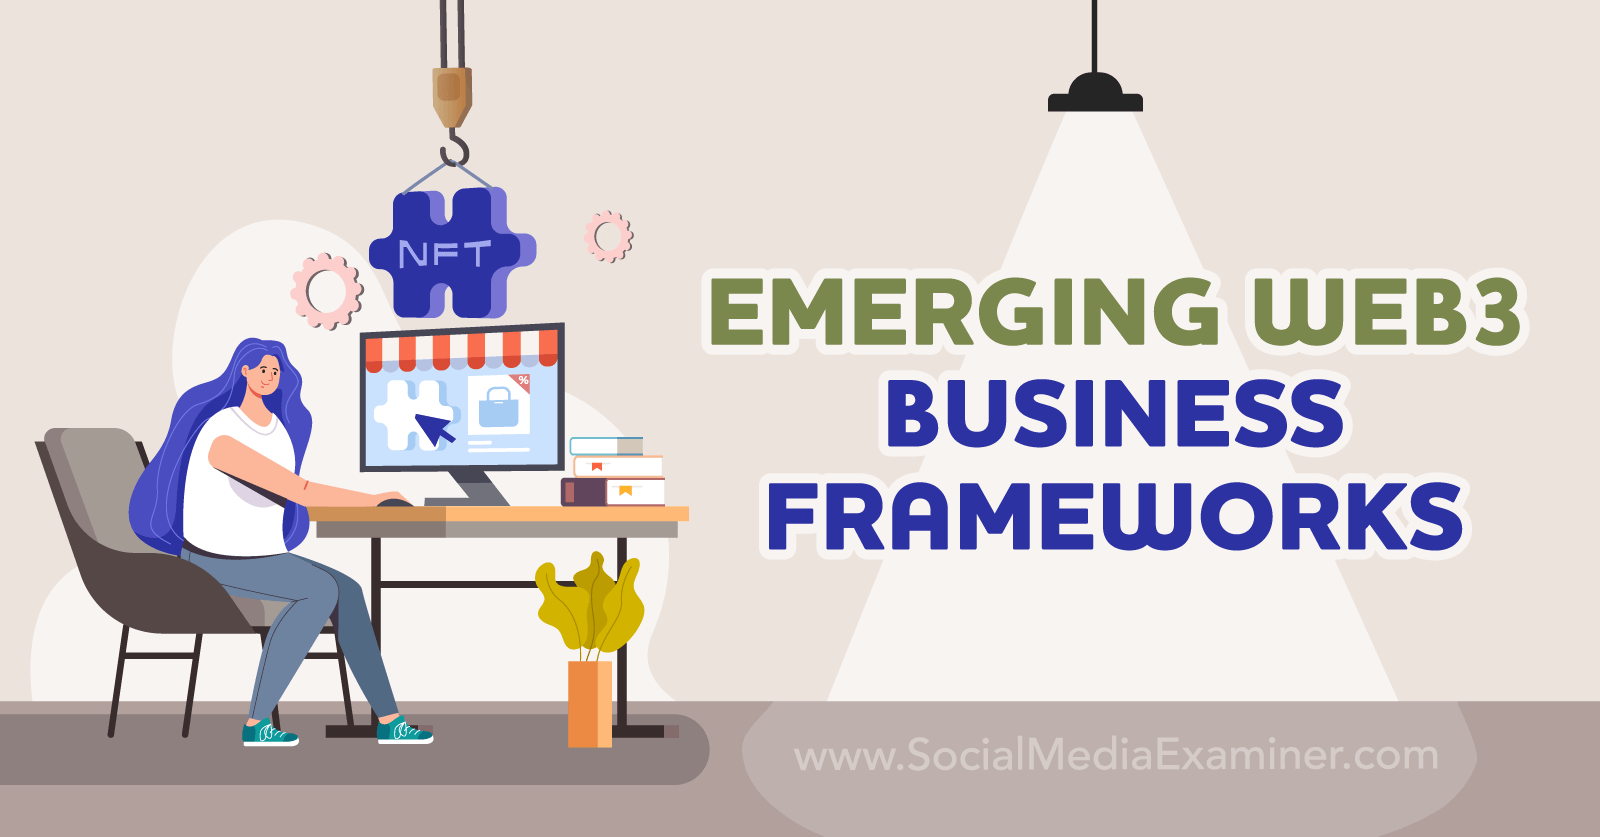 Emerging Web3 Business Frameworks by Social Media Examiner